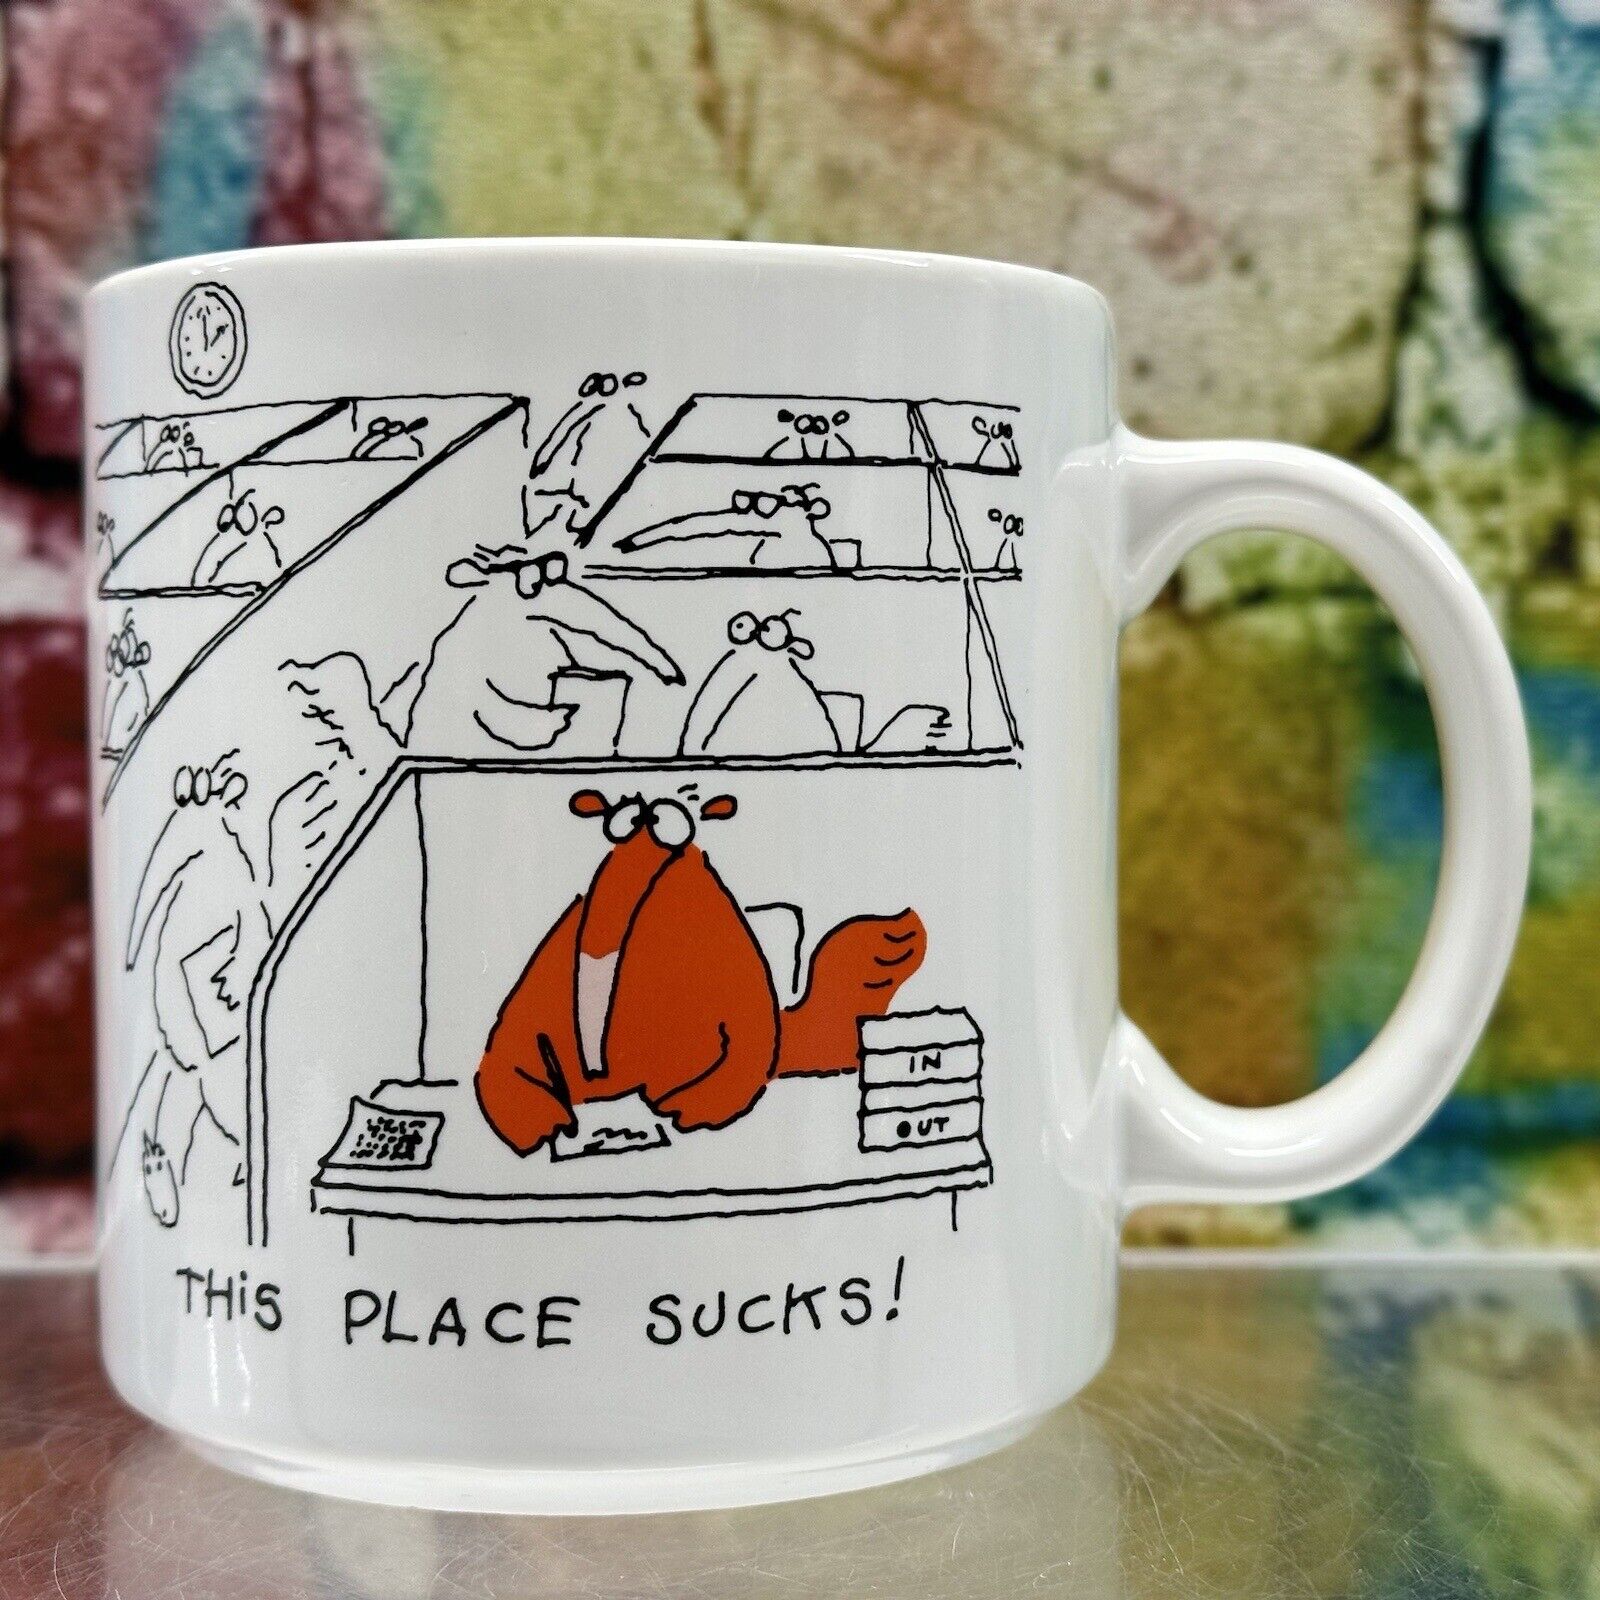 THIS PLACE SUCKS  OZ Coffee Mug Cup Office Work Desk Boring Cubicle Job Grind